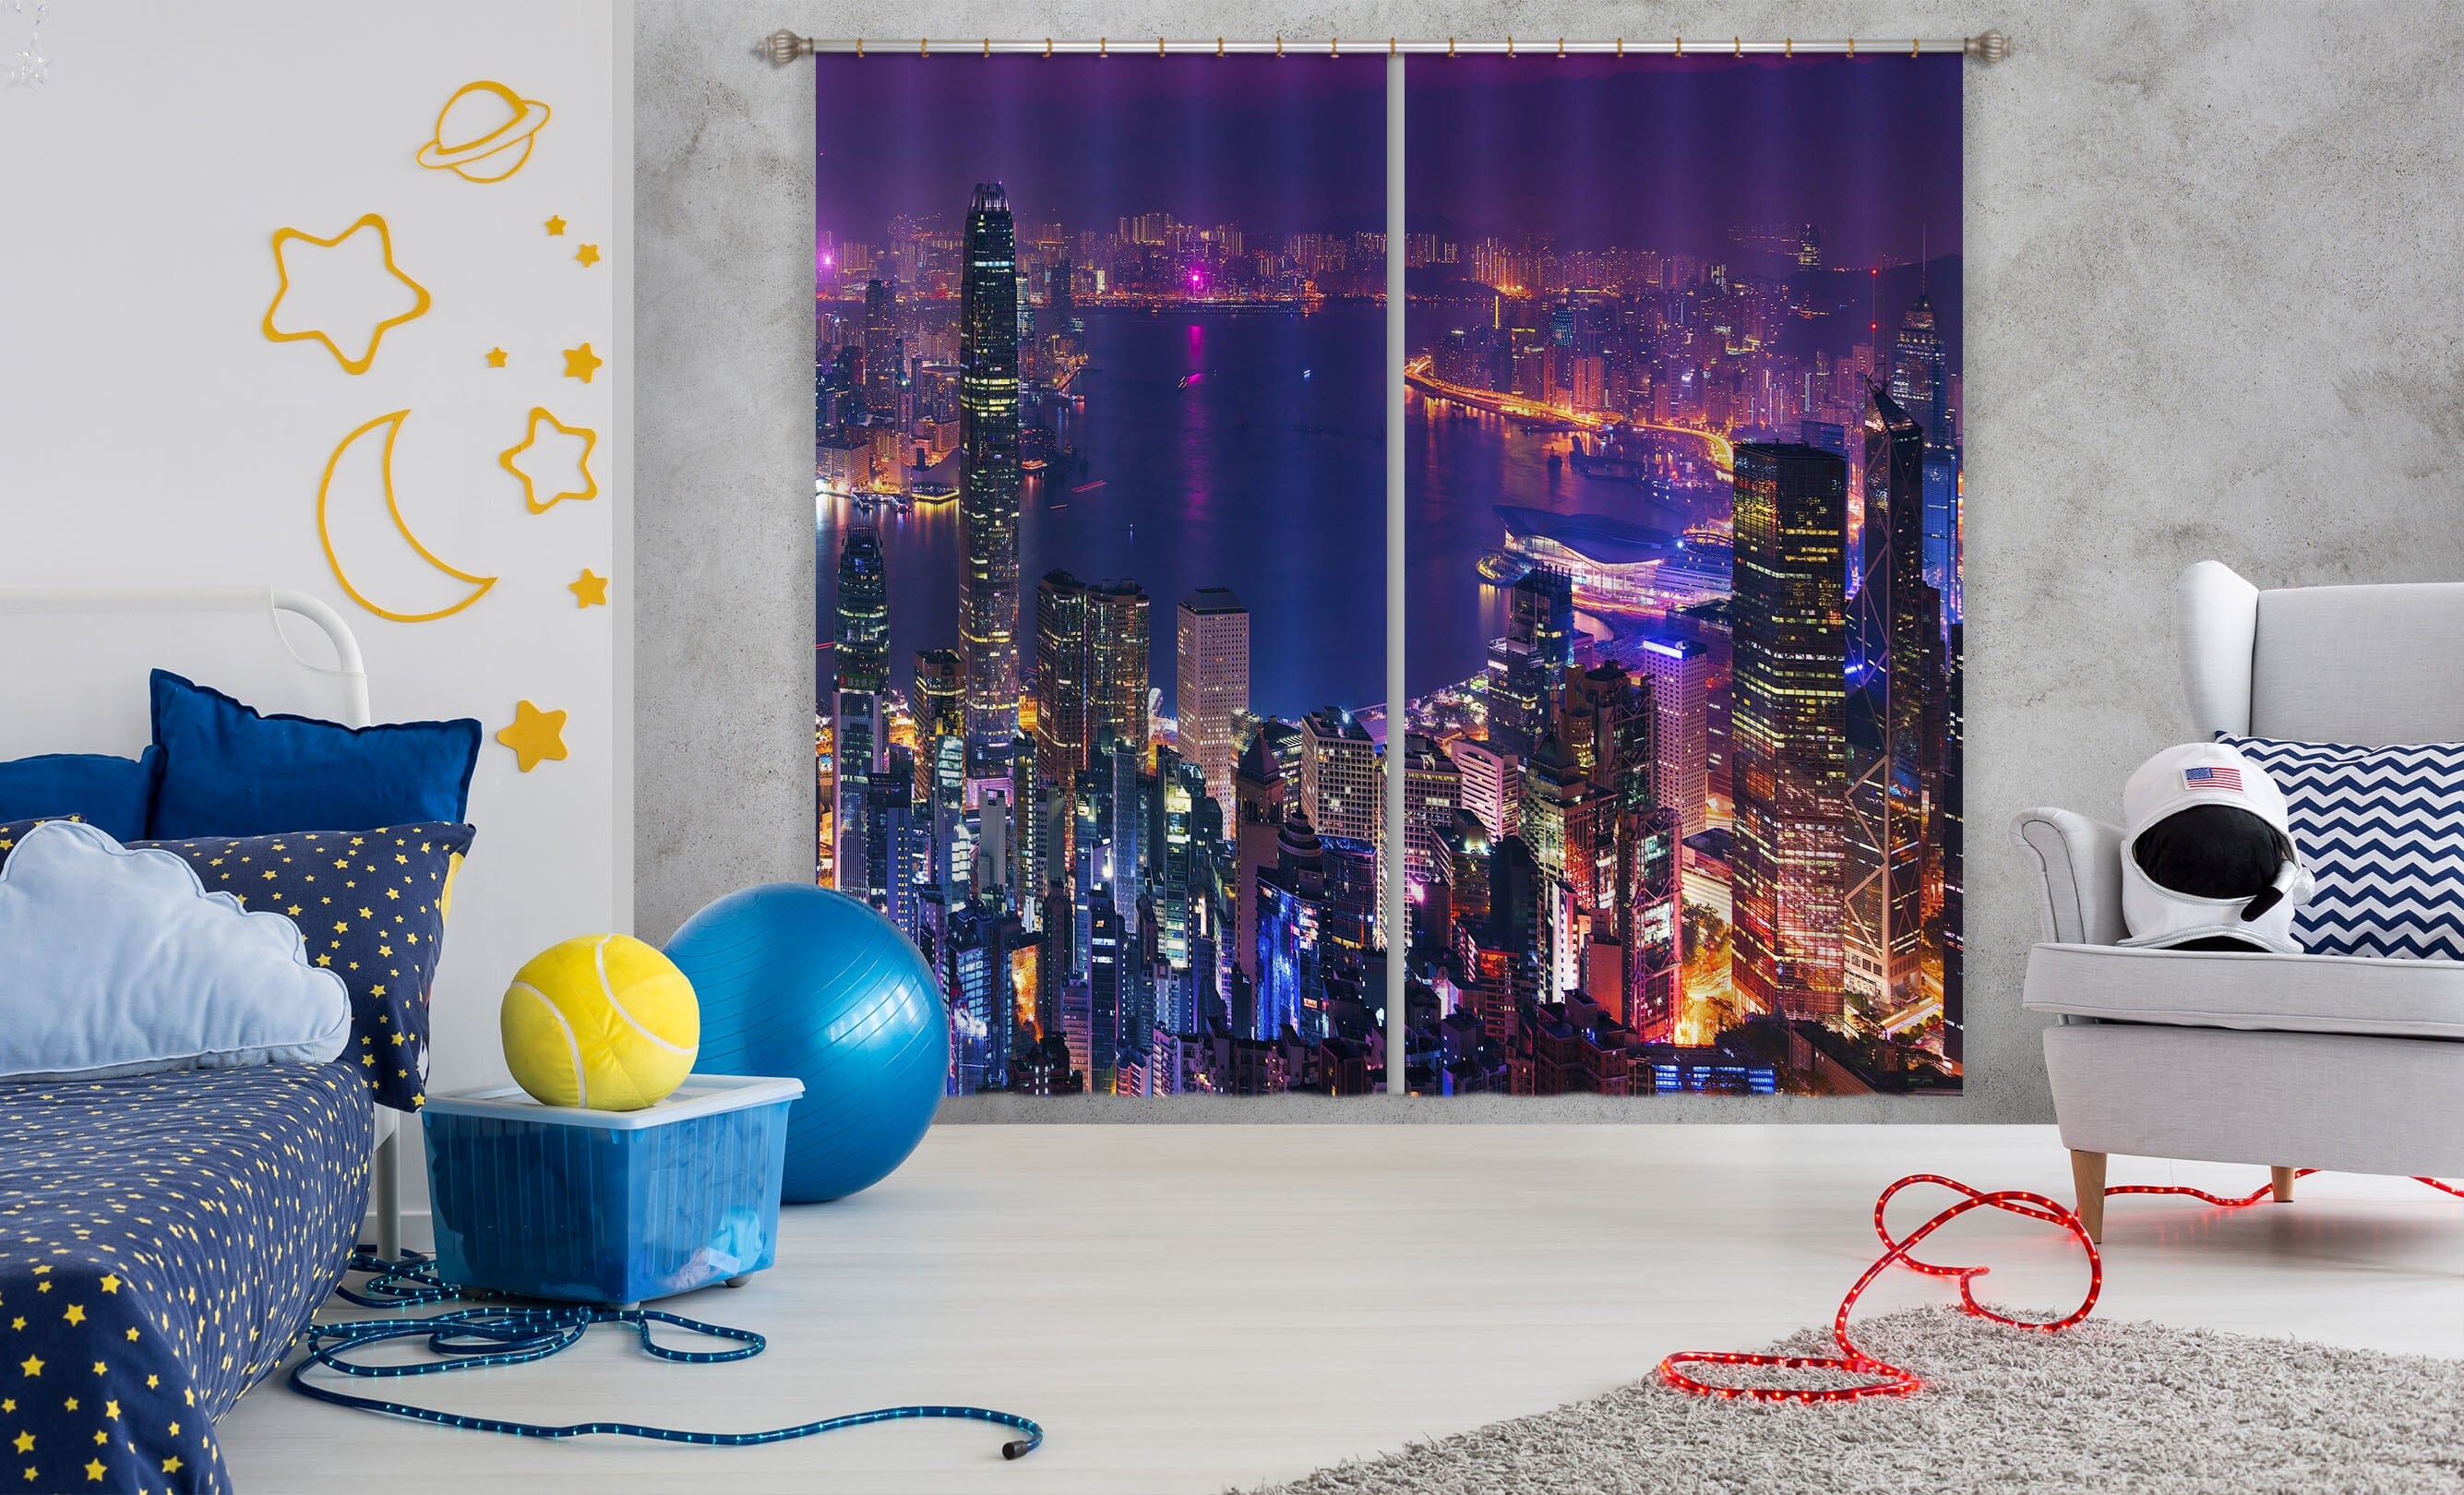 3D City Lights 180 Marco Carmassi Curtain Curtains Drapes Curtains AJ Creativity Home 